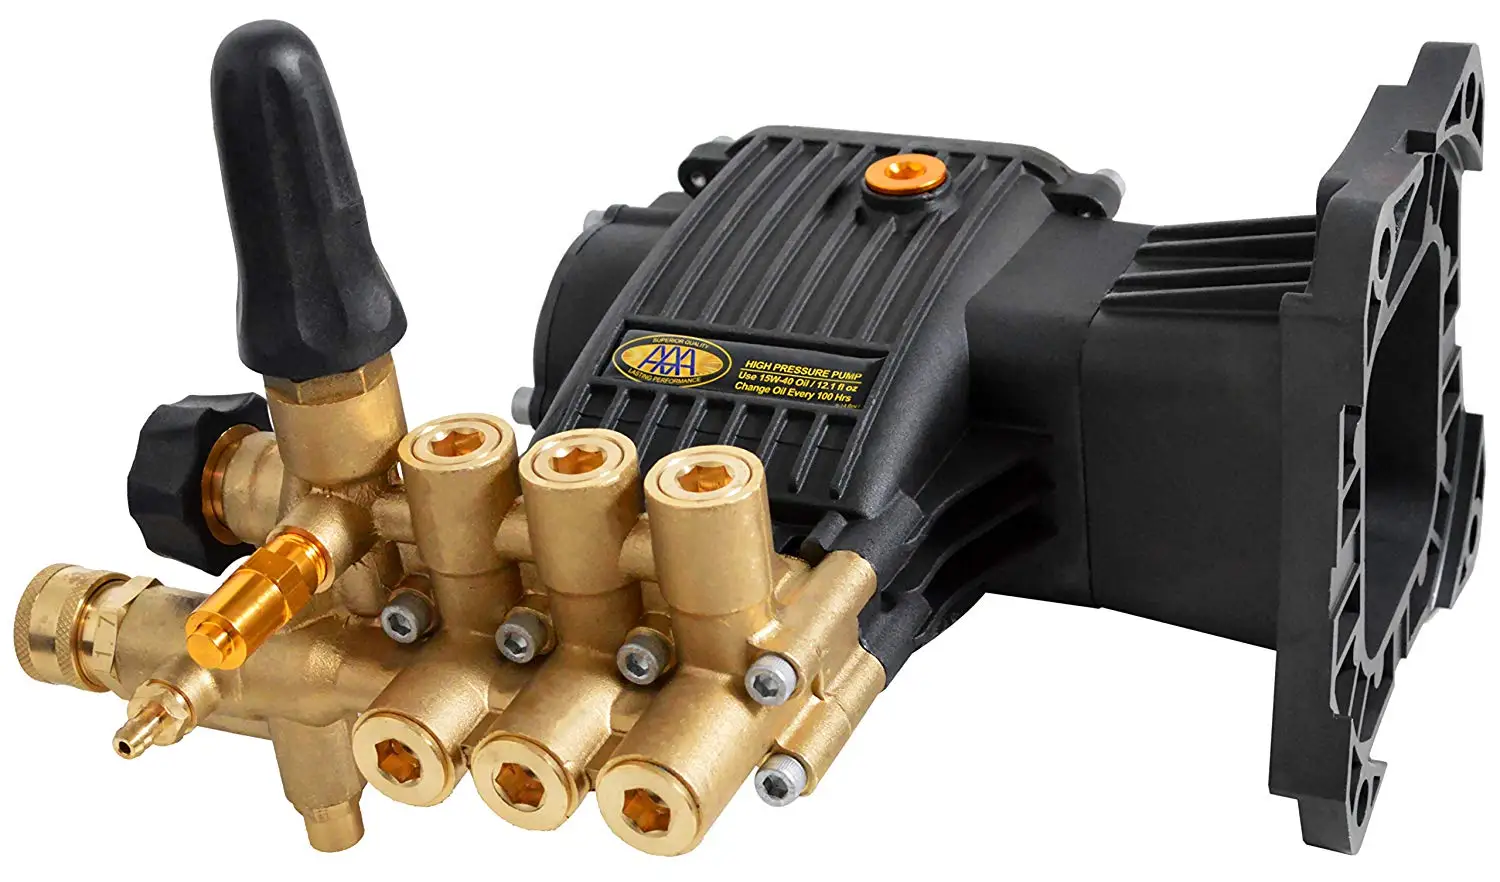 Насос psi. Мойка высокого давления Посейдон b7-220-12-h-Gun. Triplex Plunger Pressure Washer Pump. Аппарат высокого давления Посейдон (b24-500-17-h-th-Gun). Мойки высокого давления ДЕВОЛТ.